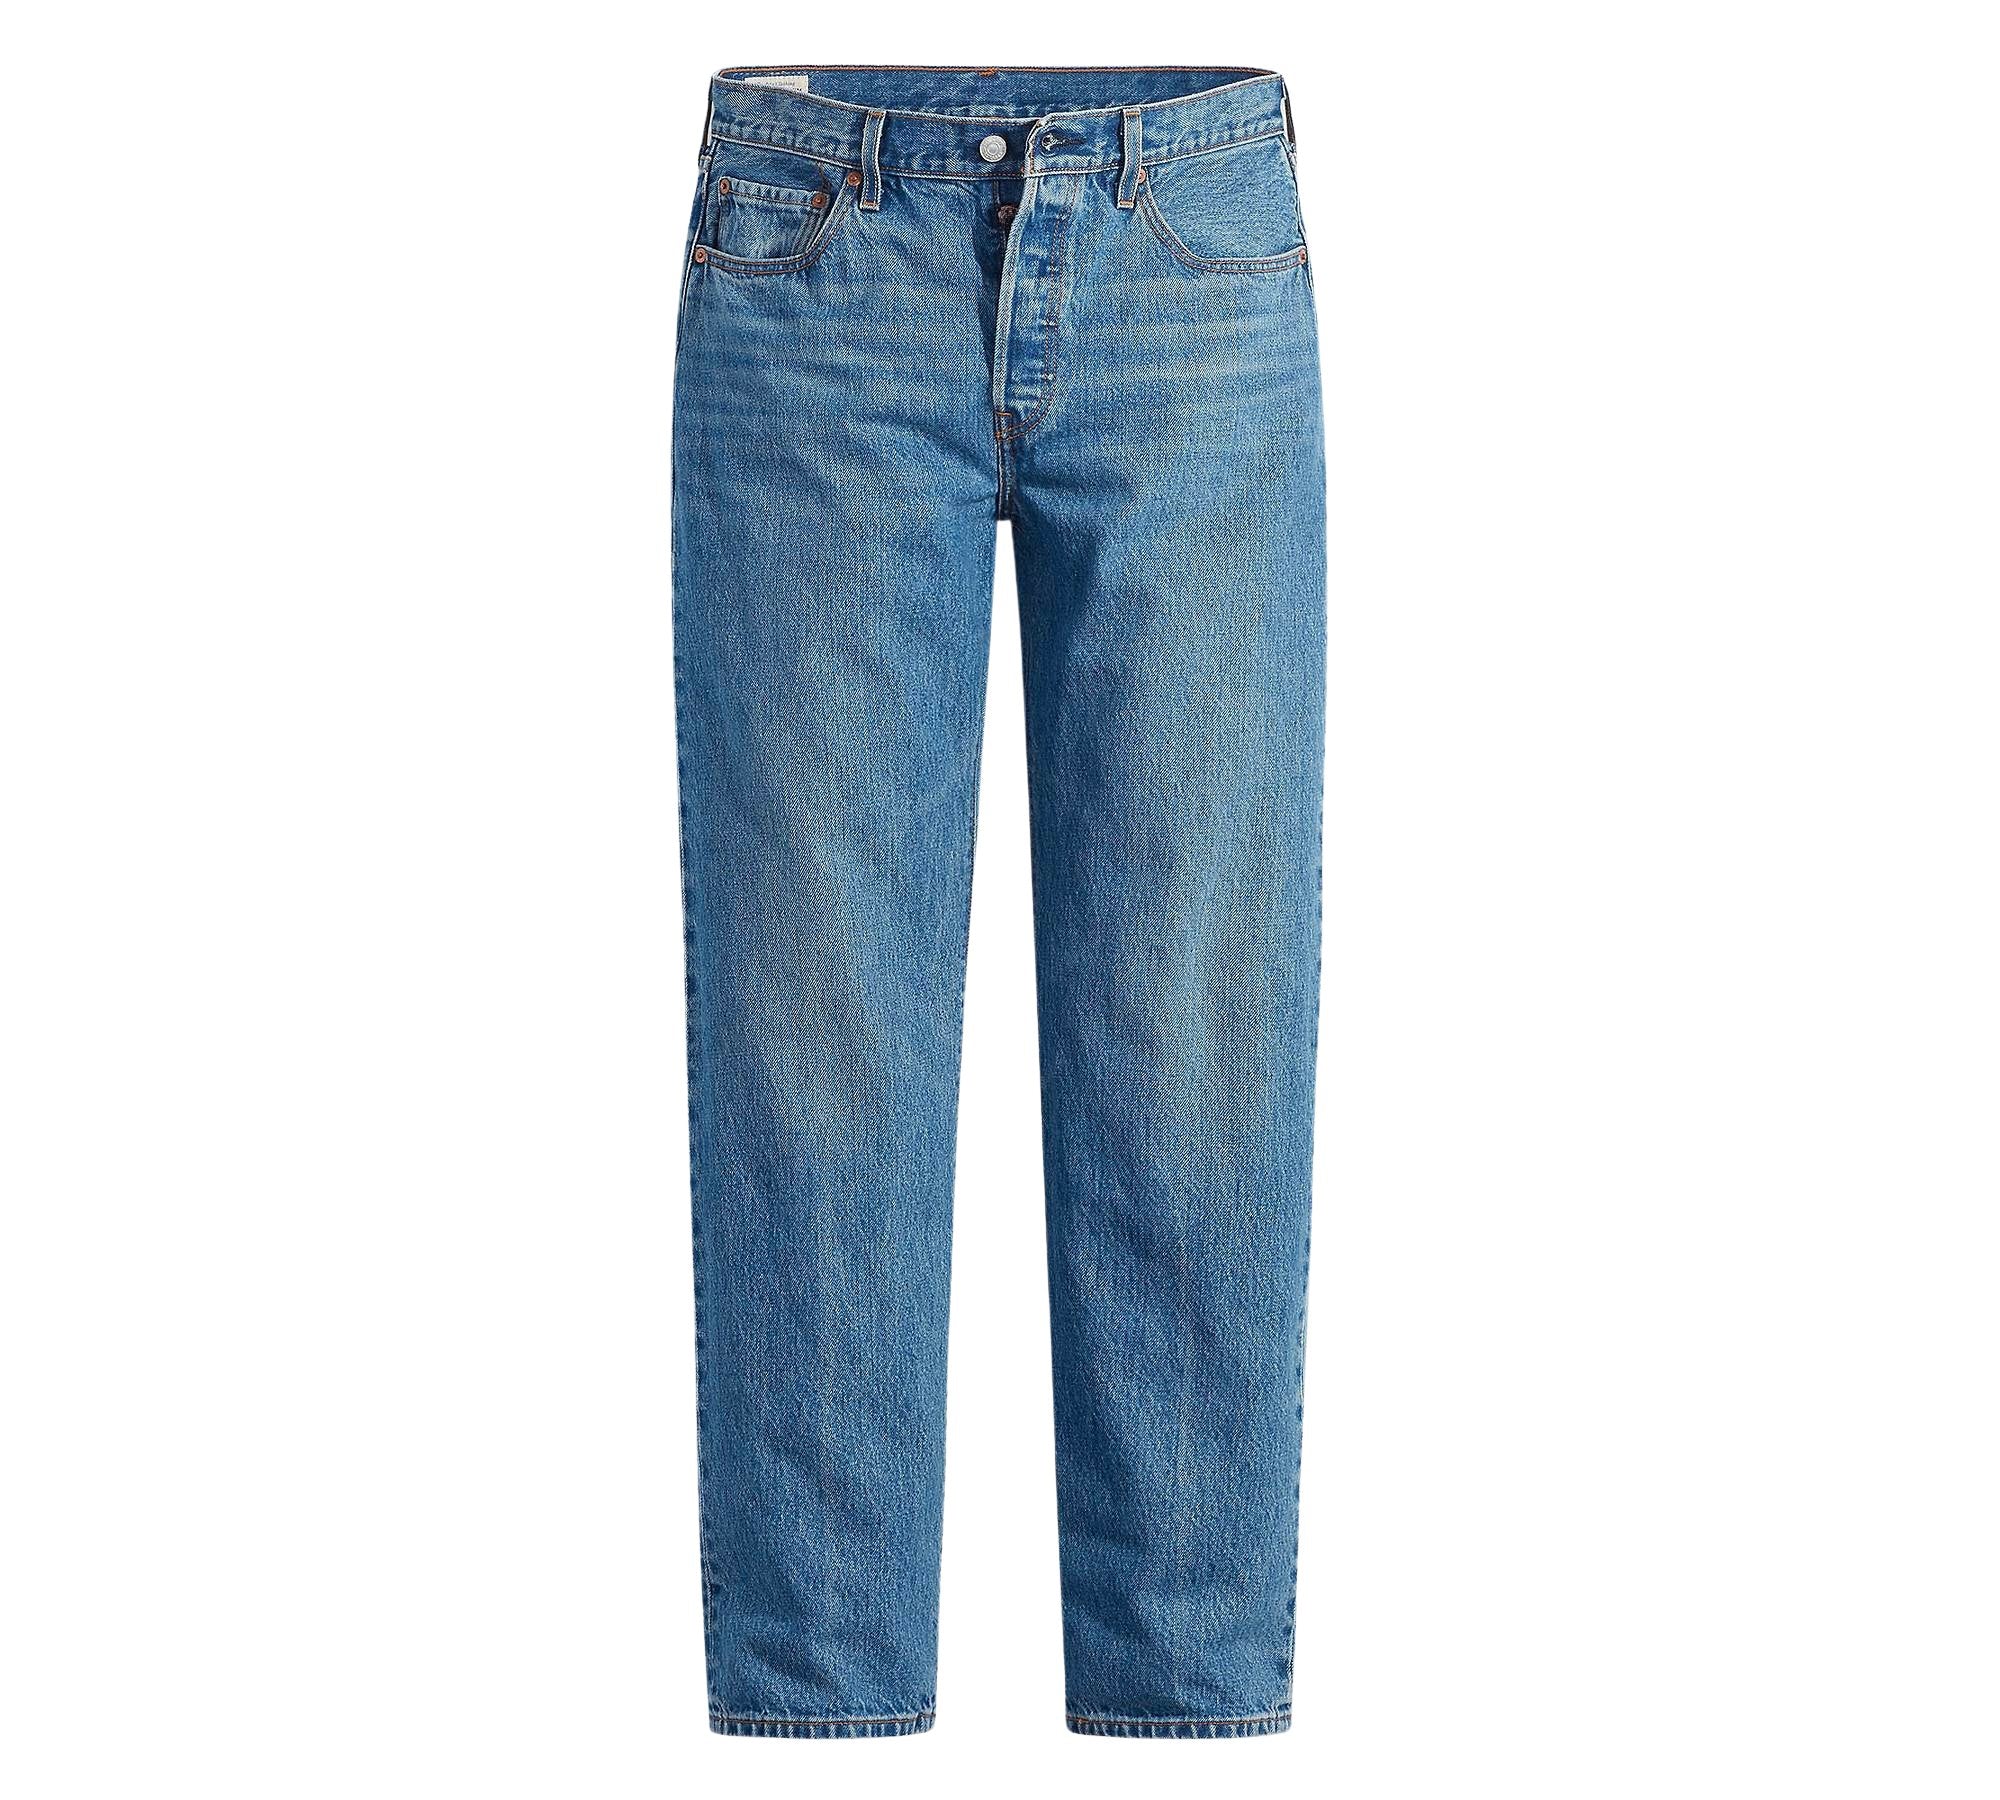 4 Pack - Vintage LEVI'S Classic Blue Zip Fly Jeans - Waist 52 - Length 30 - Vintage Superstore Online